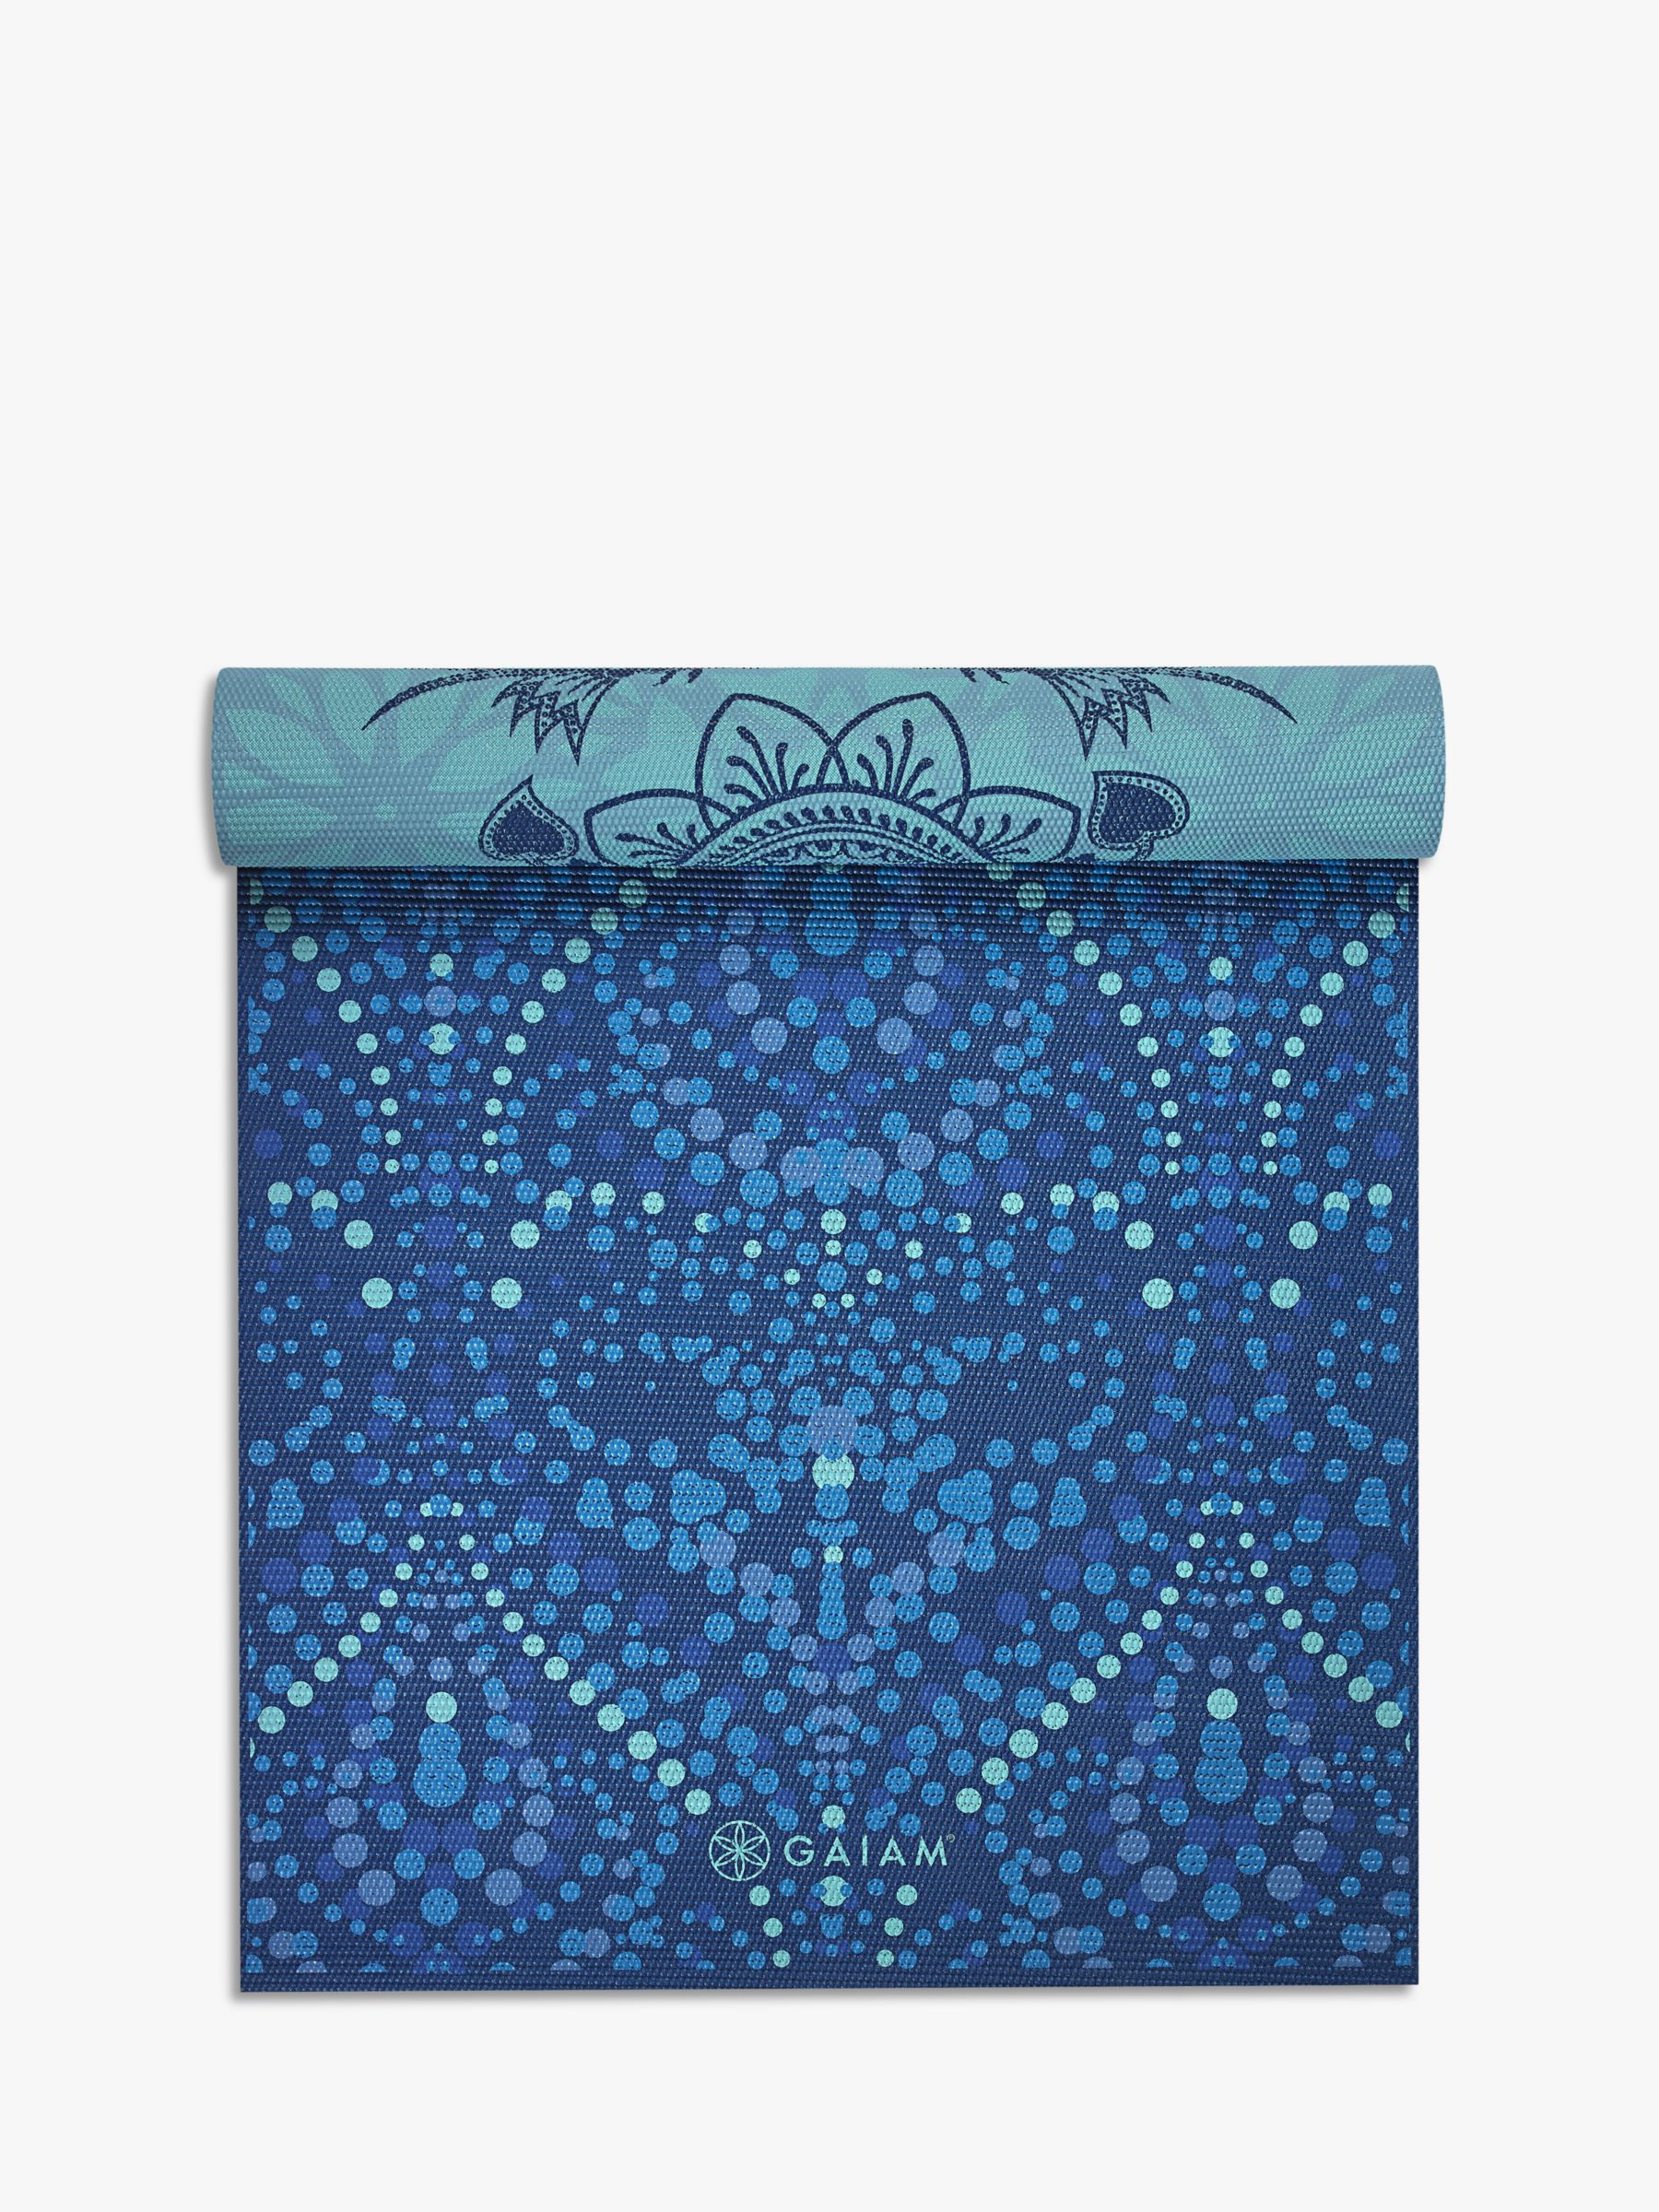 Gaiam Reversible Mystic Sky 6mm Yoga Mat, Blue